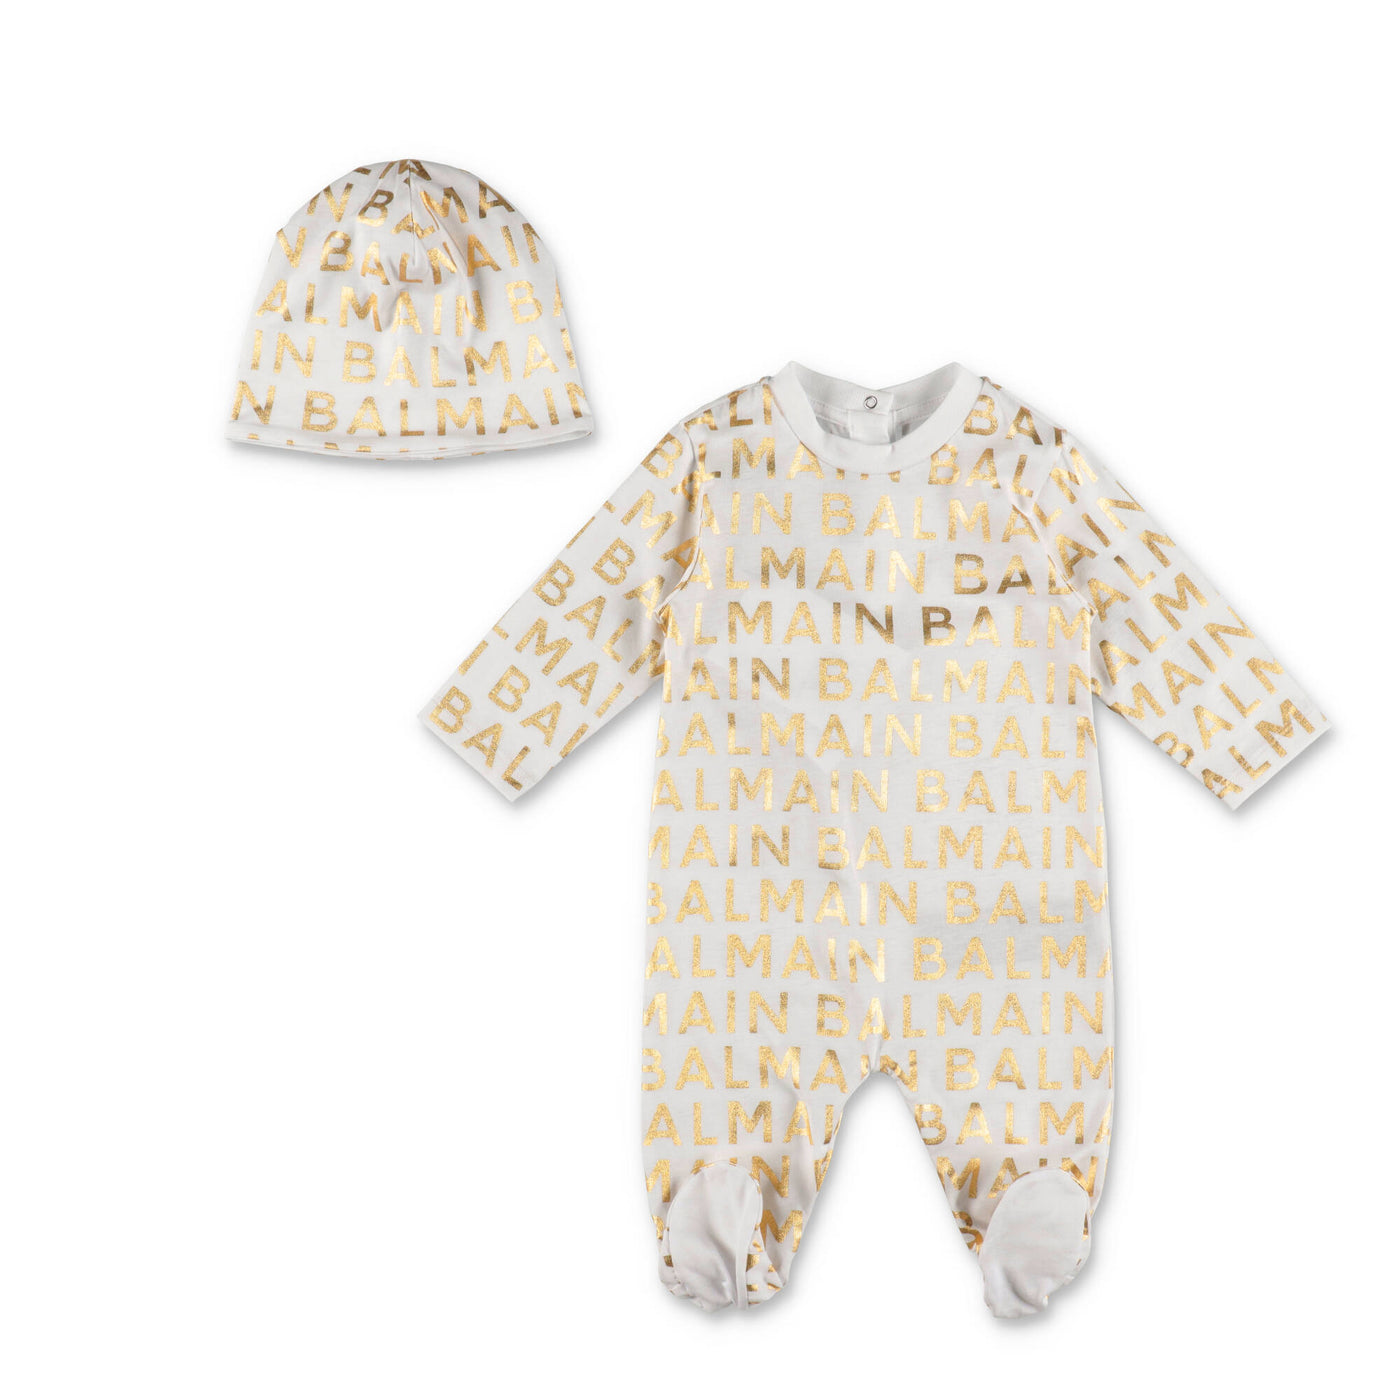 White and gold cotton jersey baby girl BALMAIN set with romper hat and bib | Carofiglio Junior